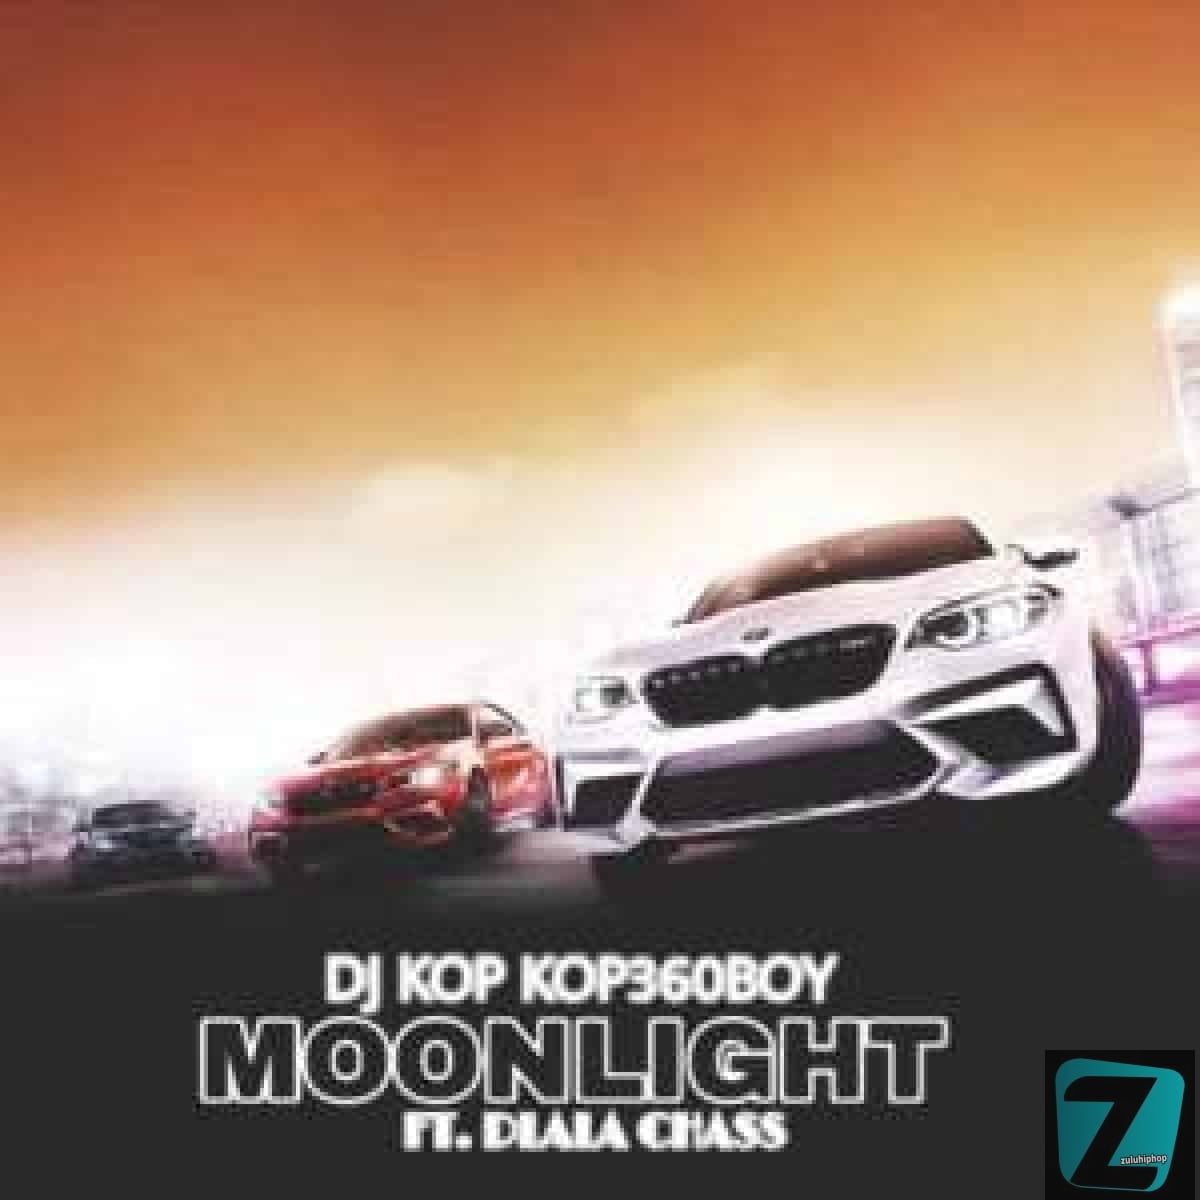 DJ Kop Kop360boy – Moonlight Ft. Dlala Chass